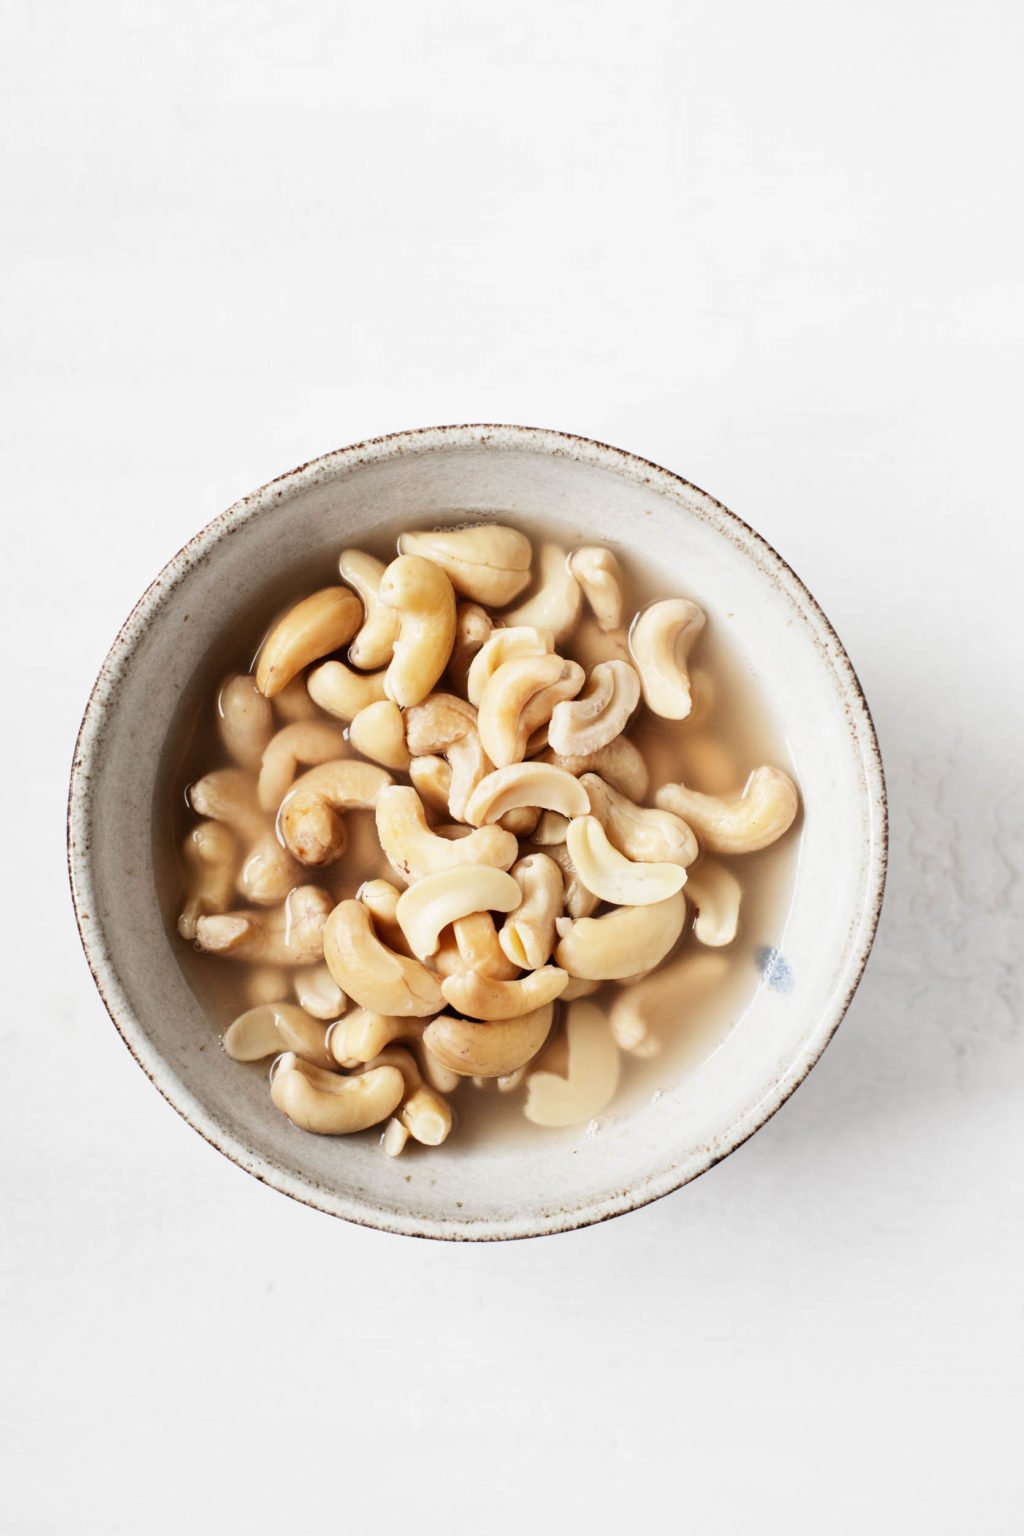 Raw cashews soak in a bowl of warm water.